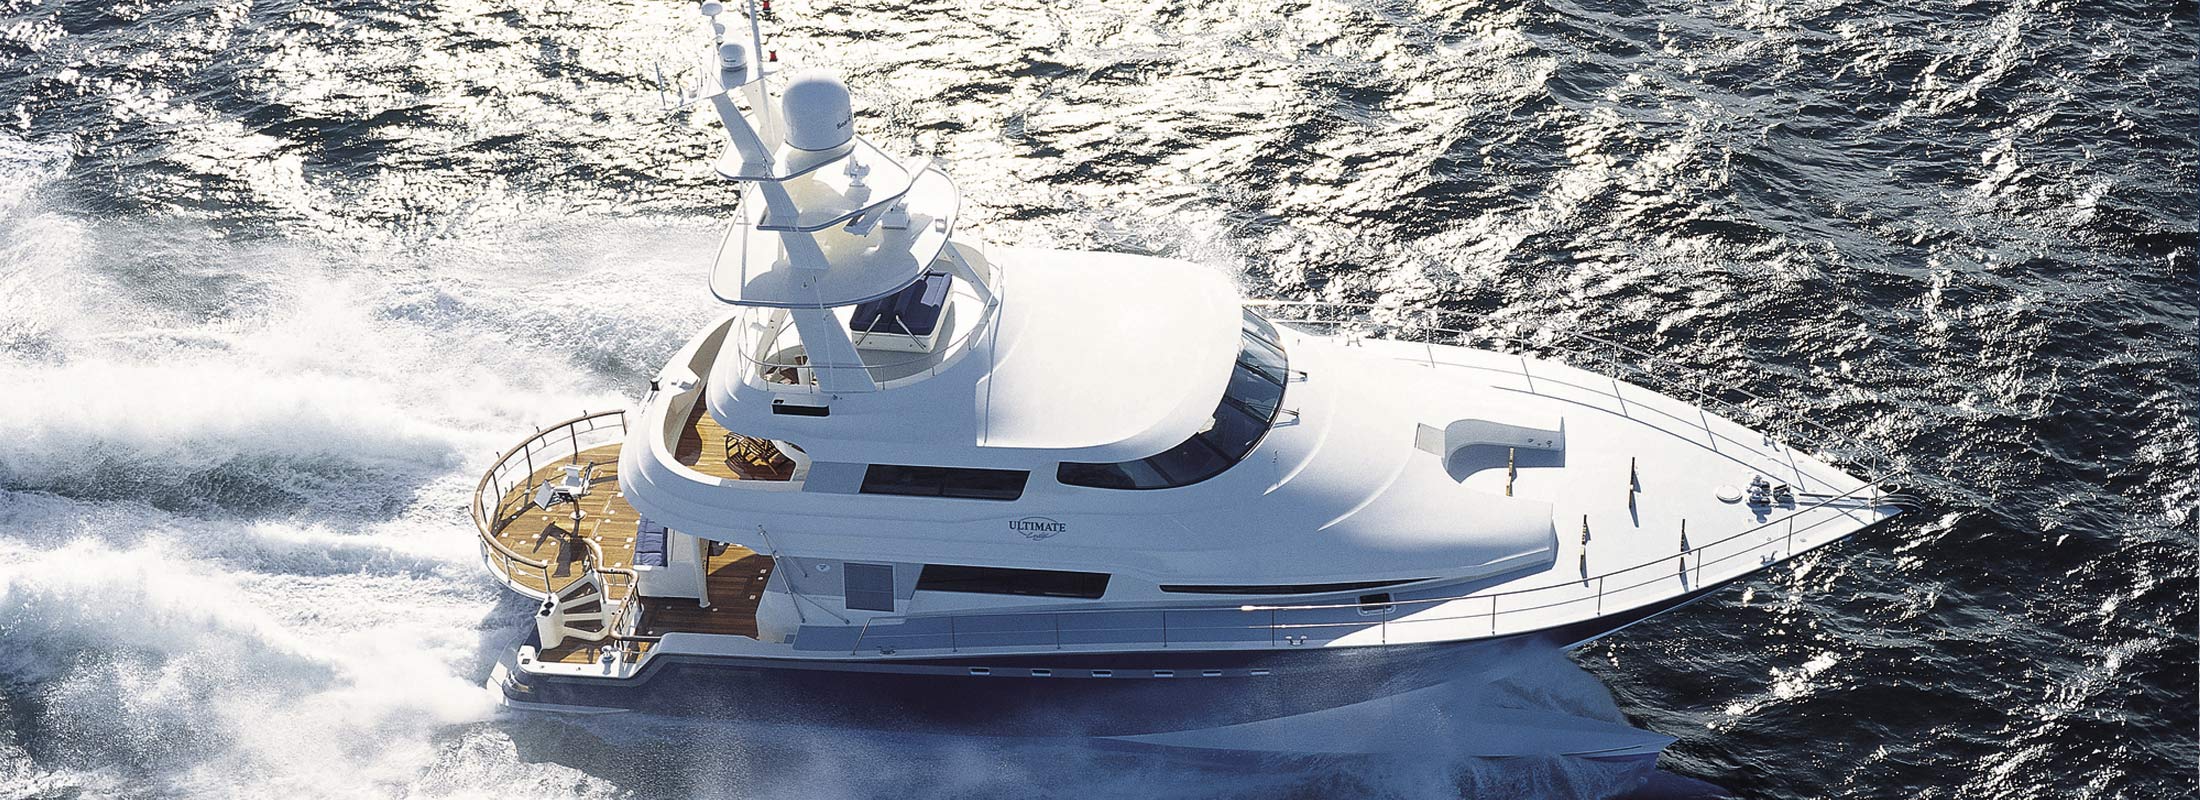 Ultimate Lady Motor Yacht for Charter Tahiti Bora Bora slider 1